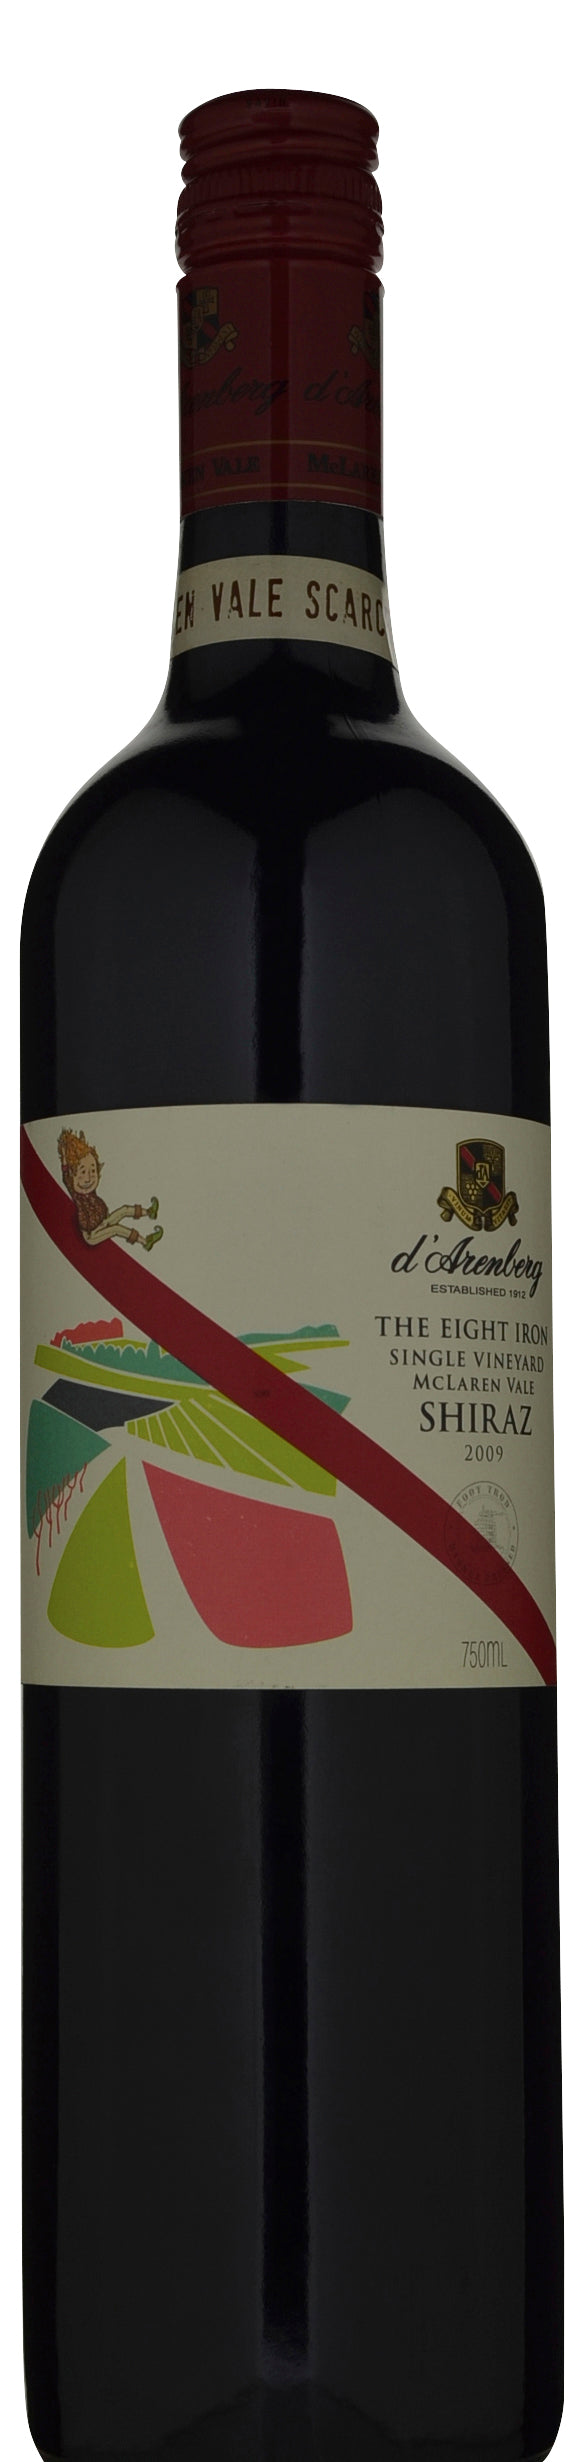 d'Arenberg The Eight Iron Single Vineyard Shiraz 2009